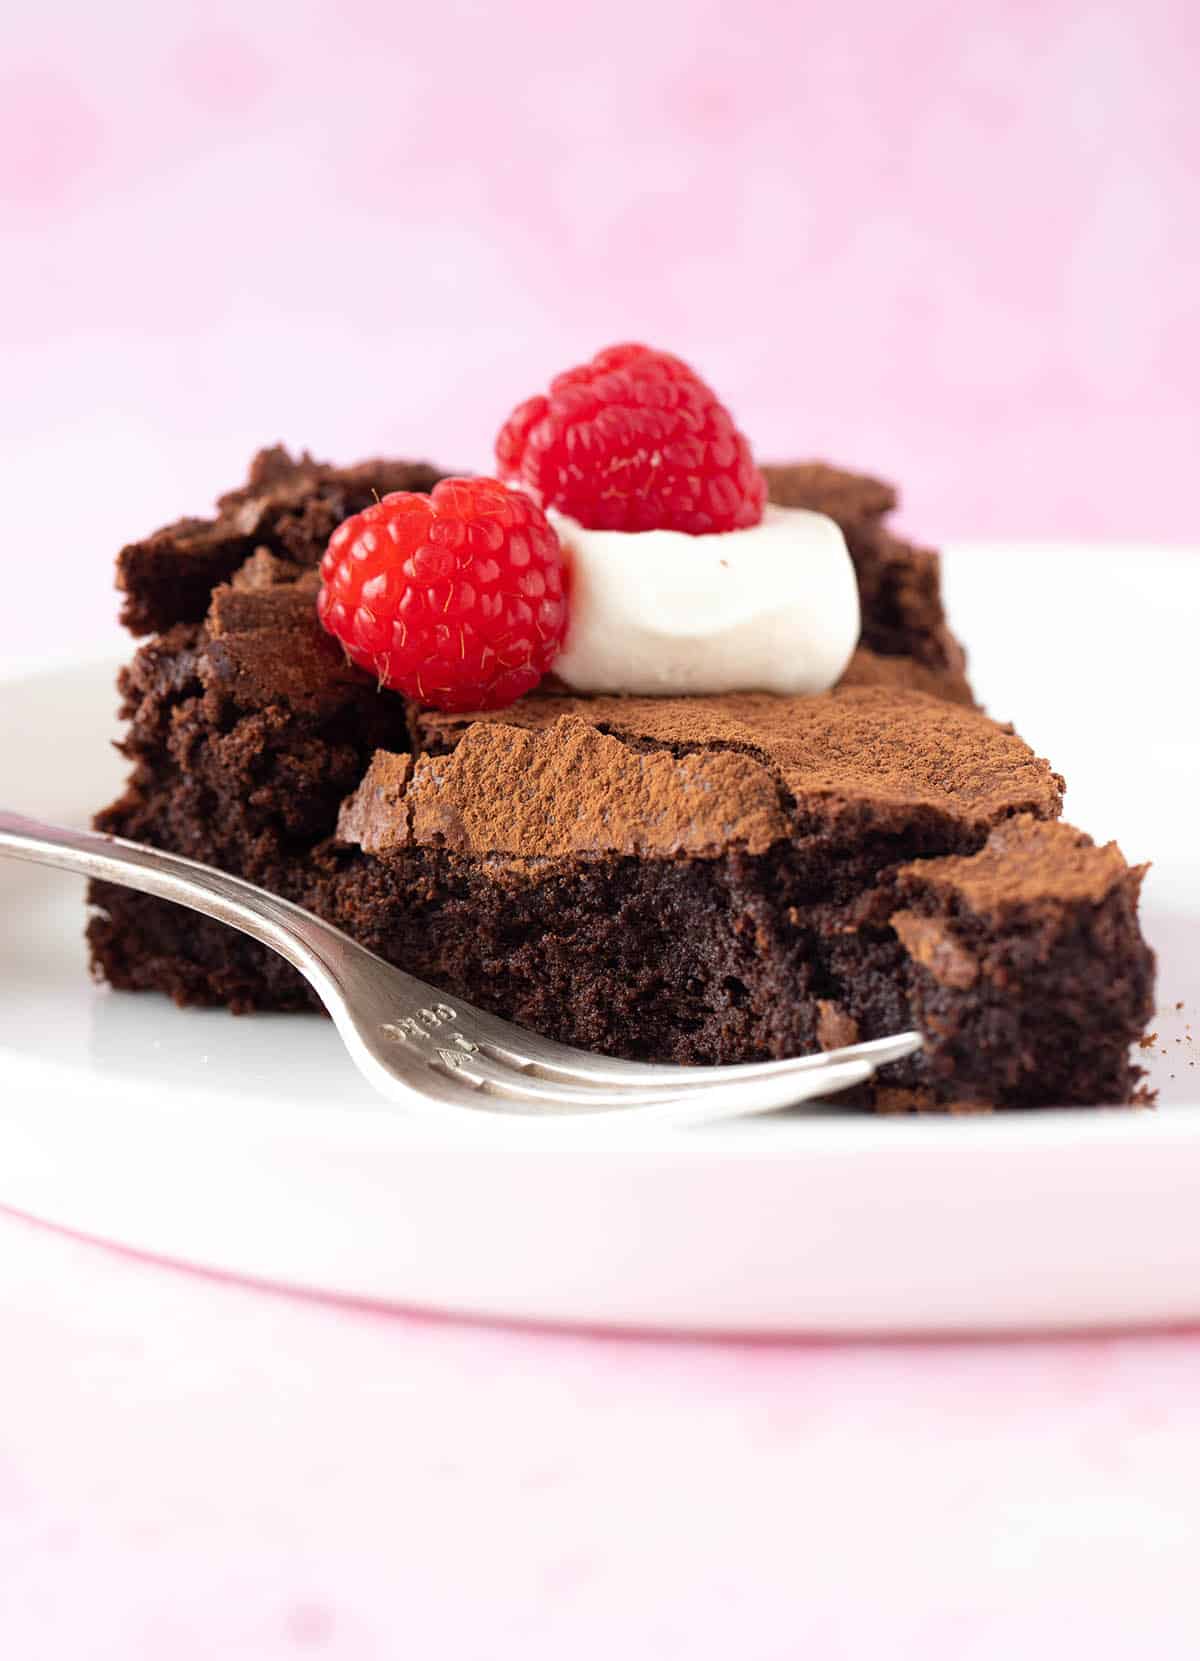 A beautiful slice of Flourless Chocolate Cake on a white plate.